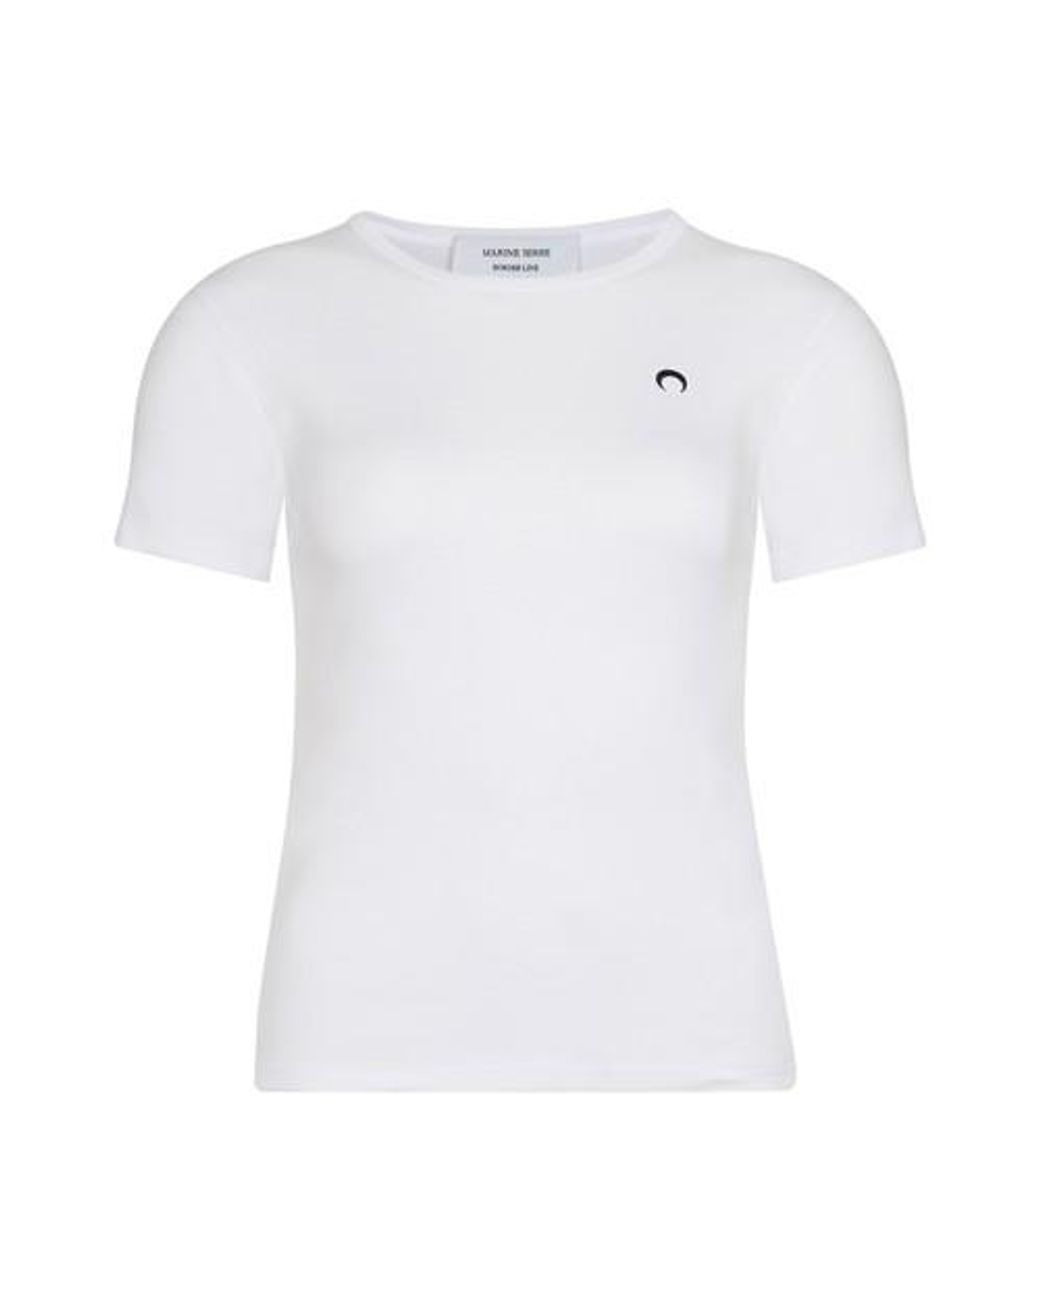 Marine Serre Logo T-shirt in 01 White (White) - Lyst